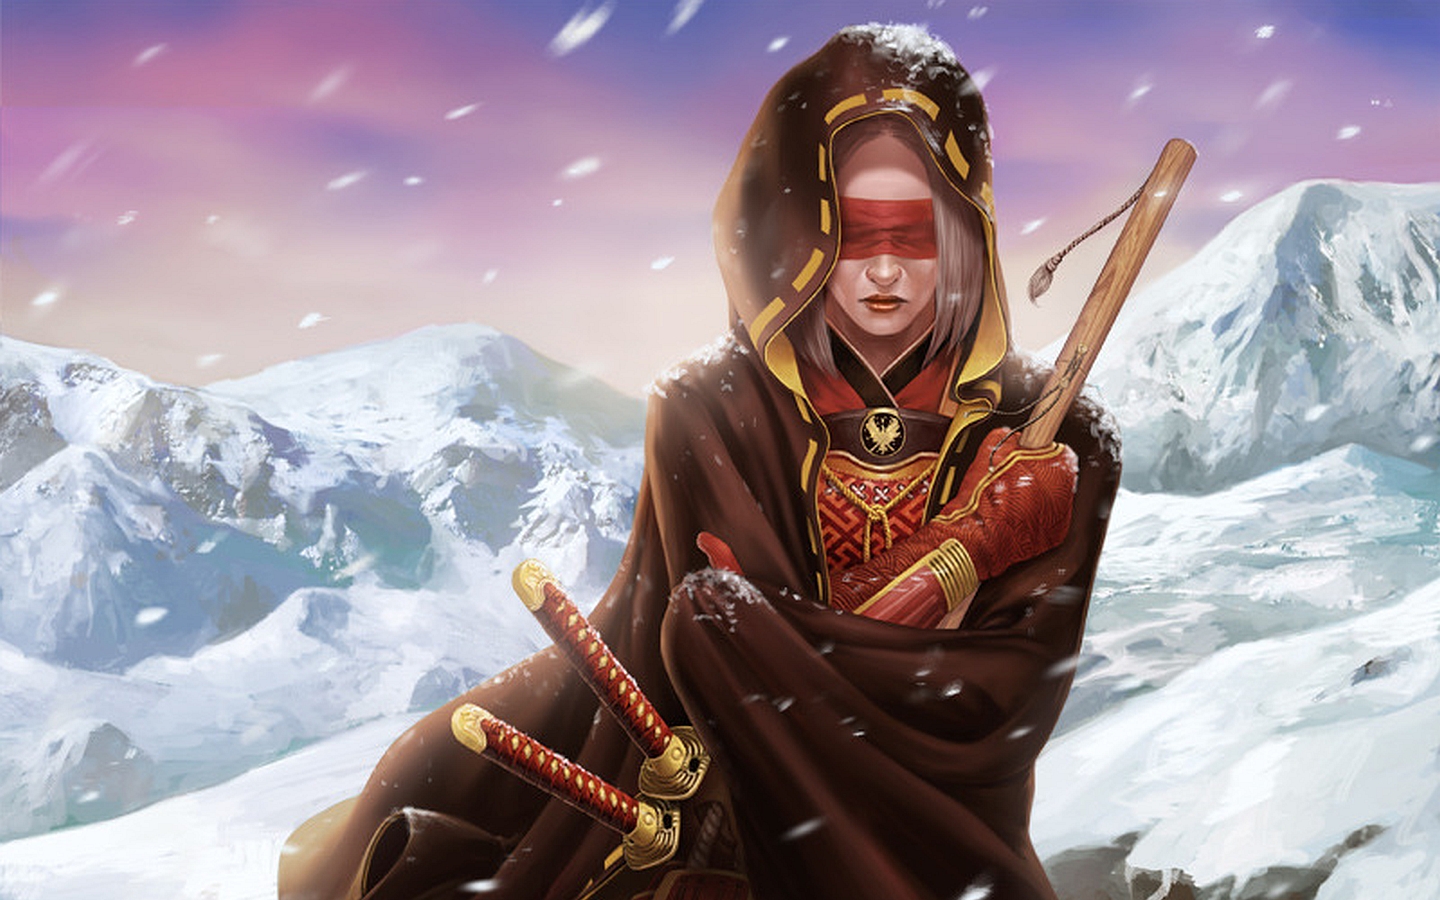 Women Warrior armor magic Fantasy Soldier Digital Art 4K 